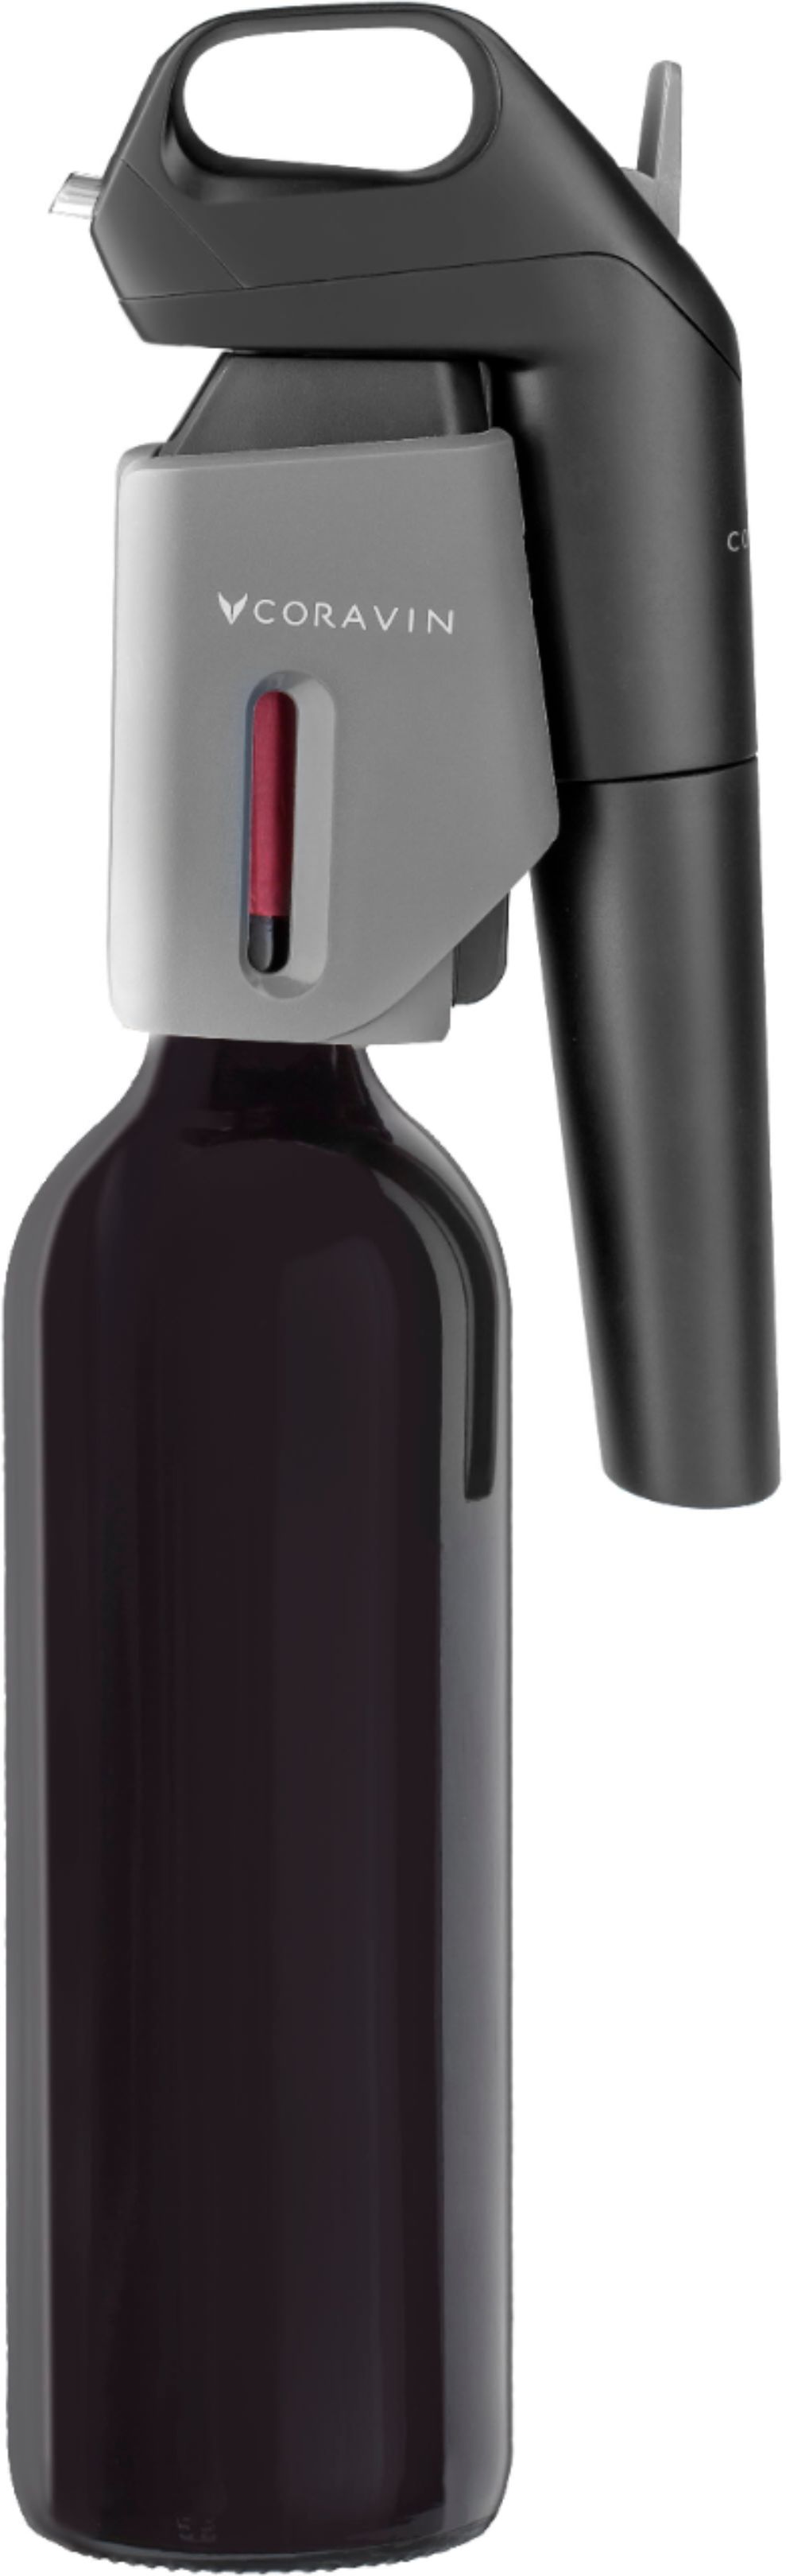 Coravin Model Three Wine Preservation System 112209 for sale online